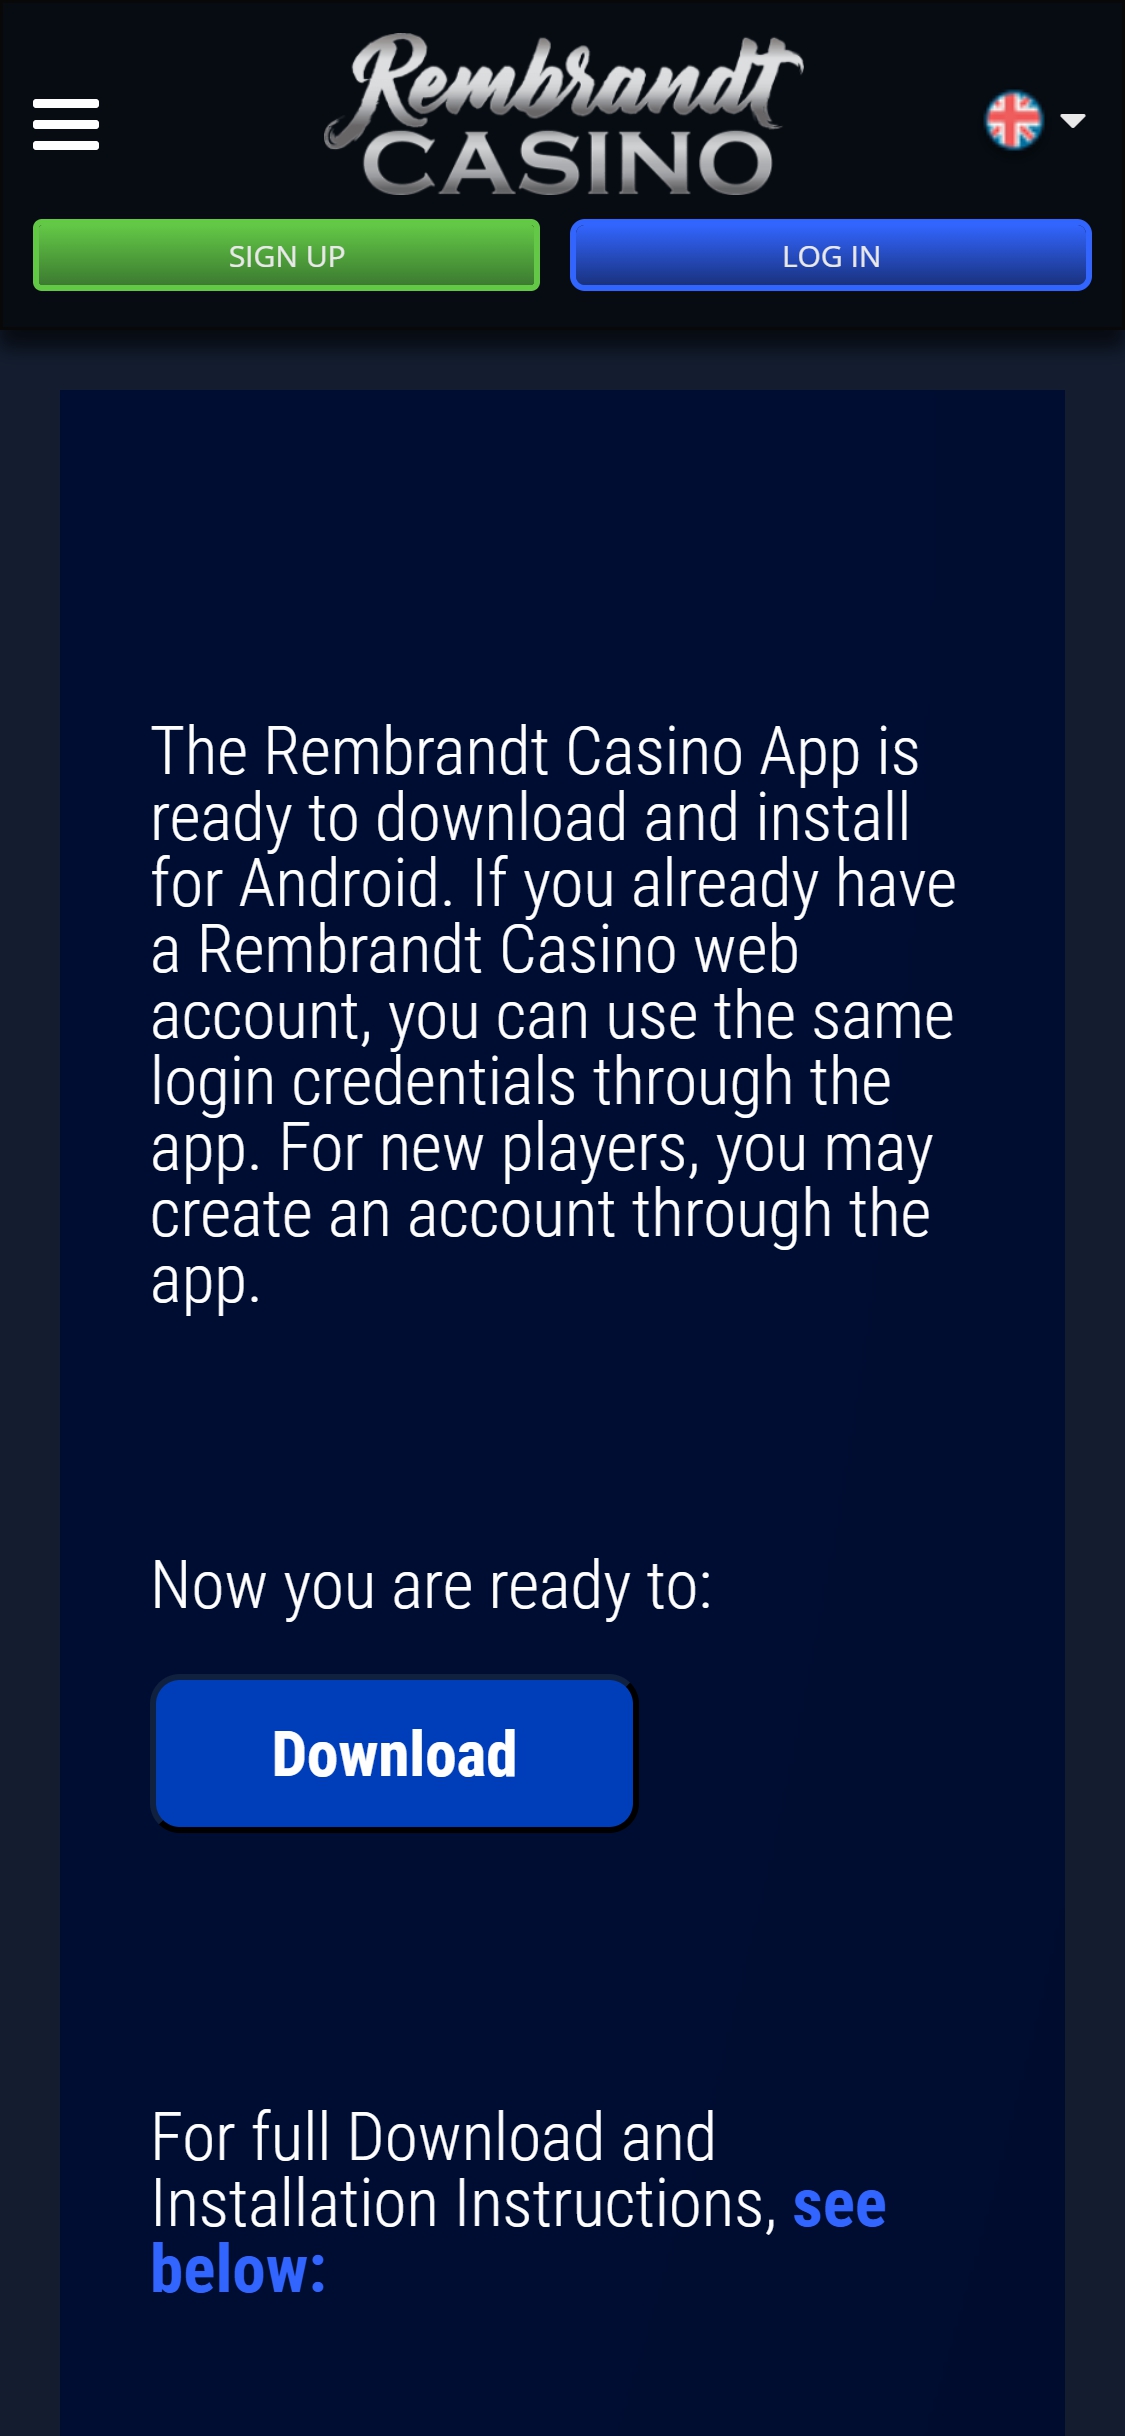 Rembrandt Casino Mobile App Review